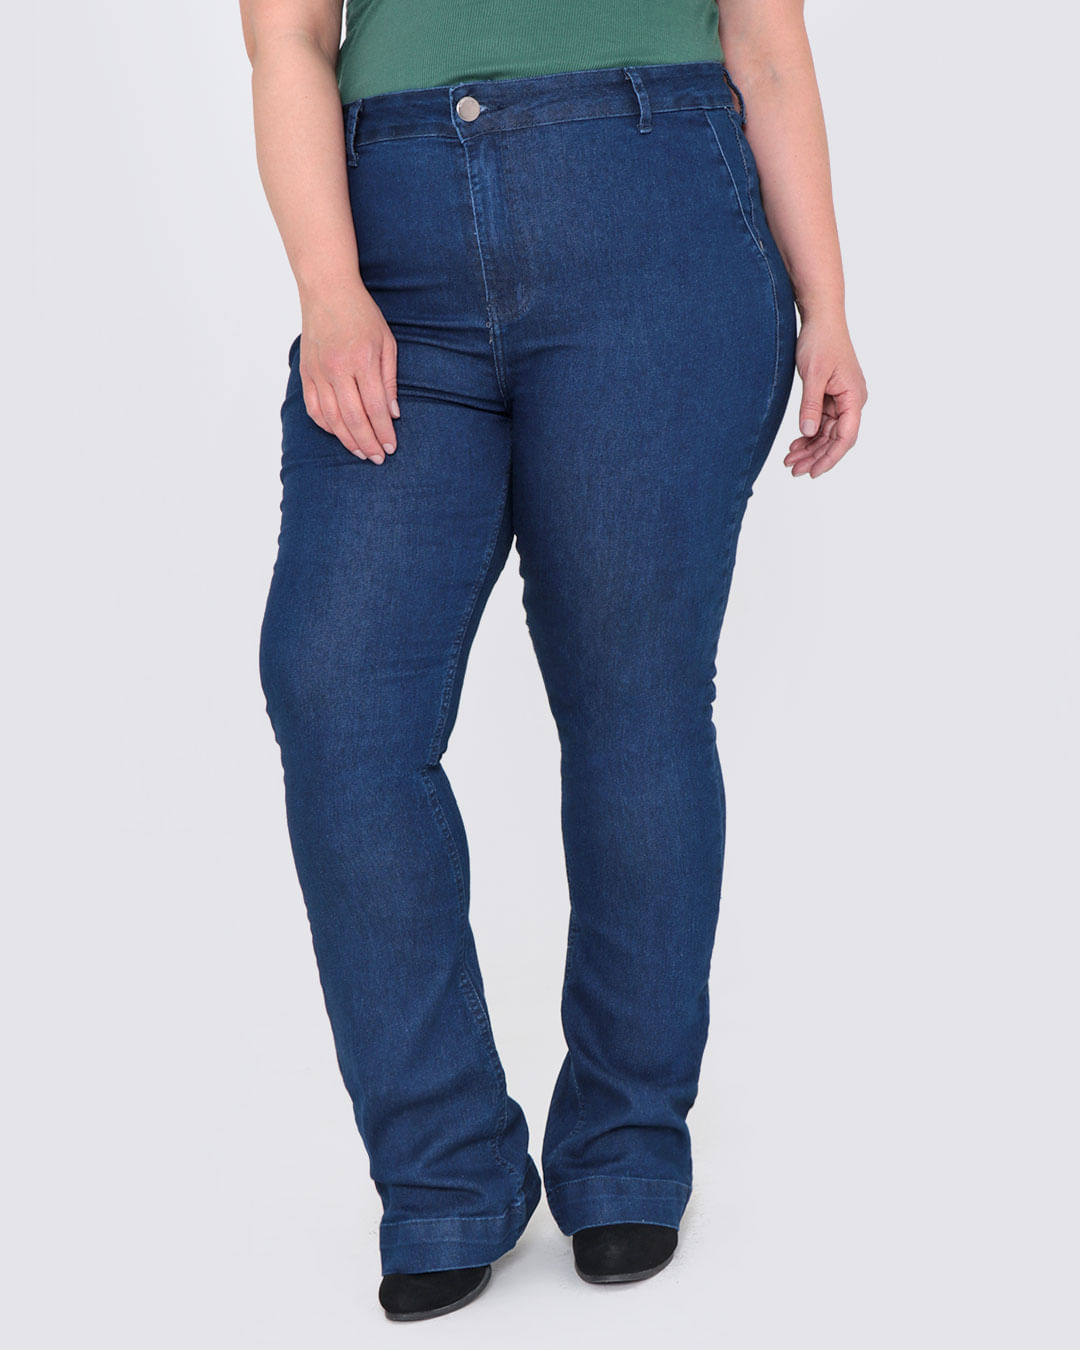 Calça Jeans Plus Size Feminina Empina Bumbum Skinny Azul